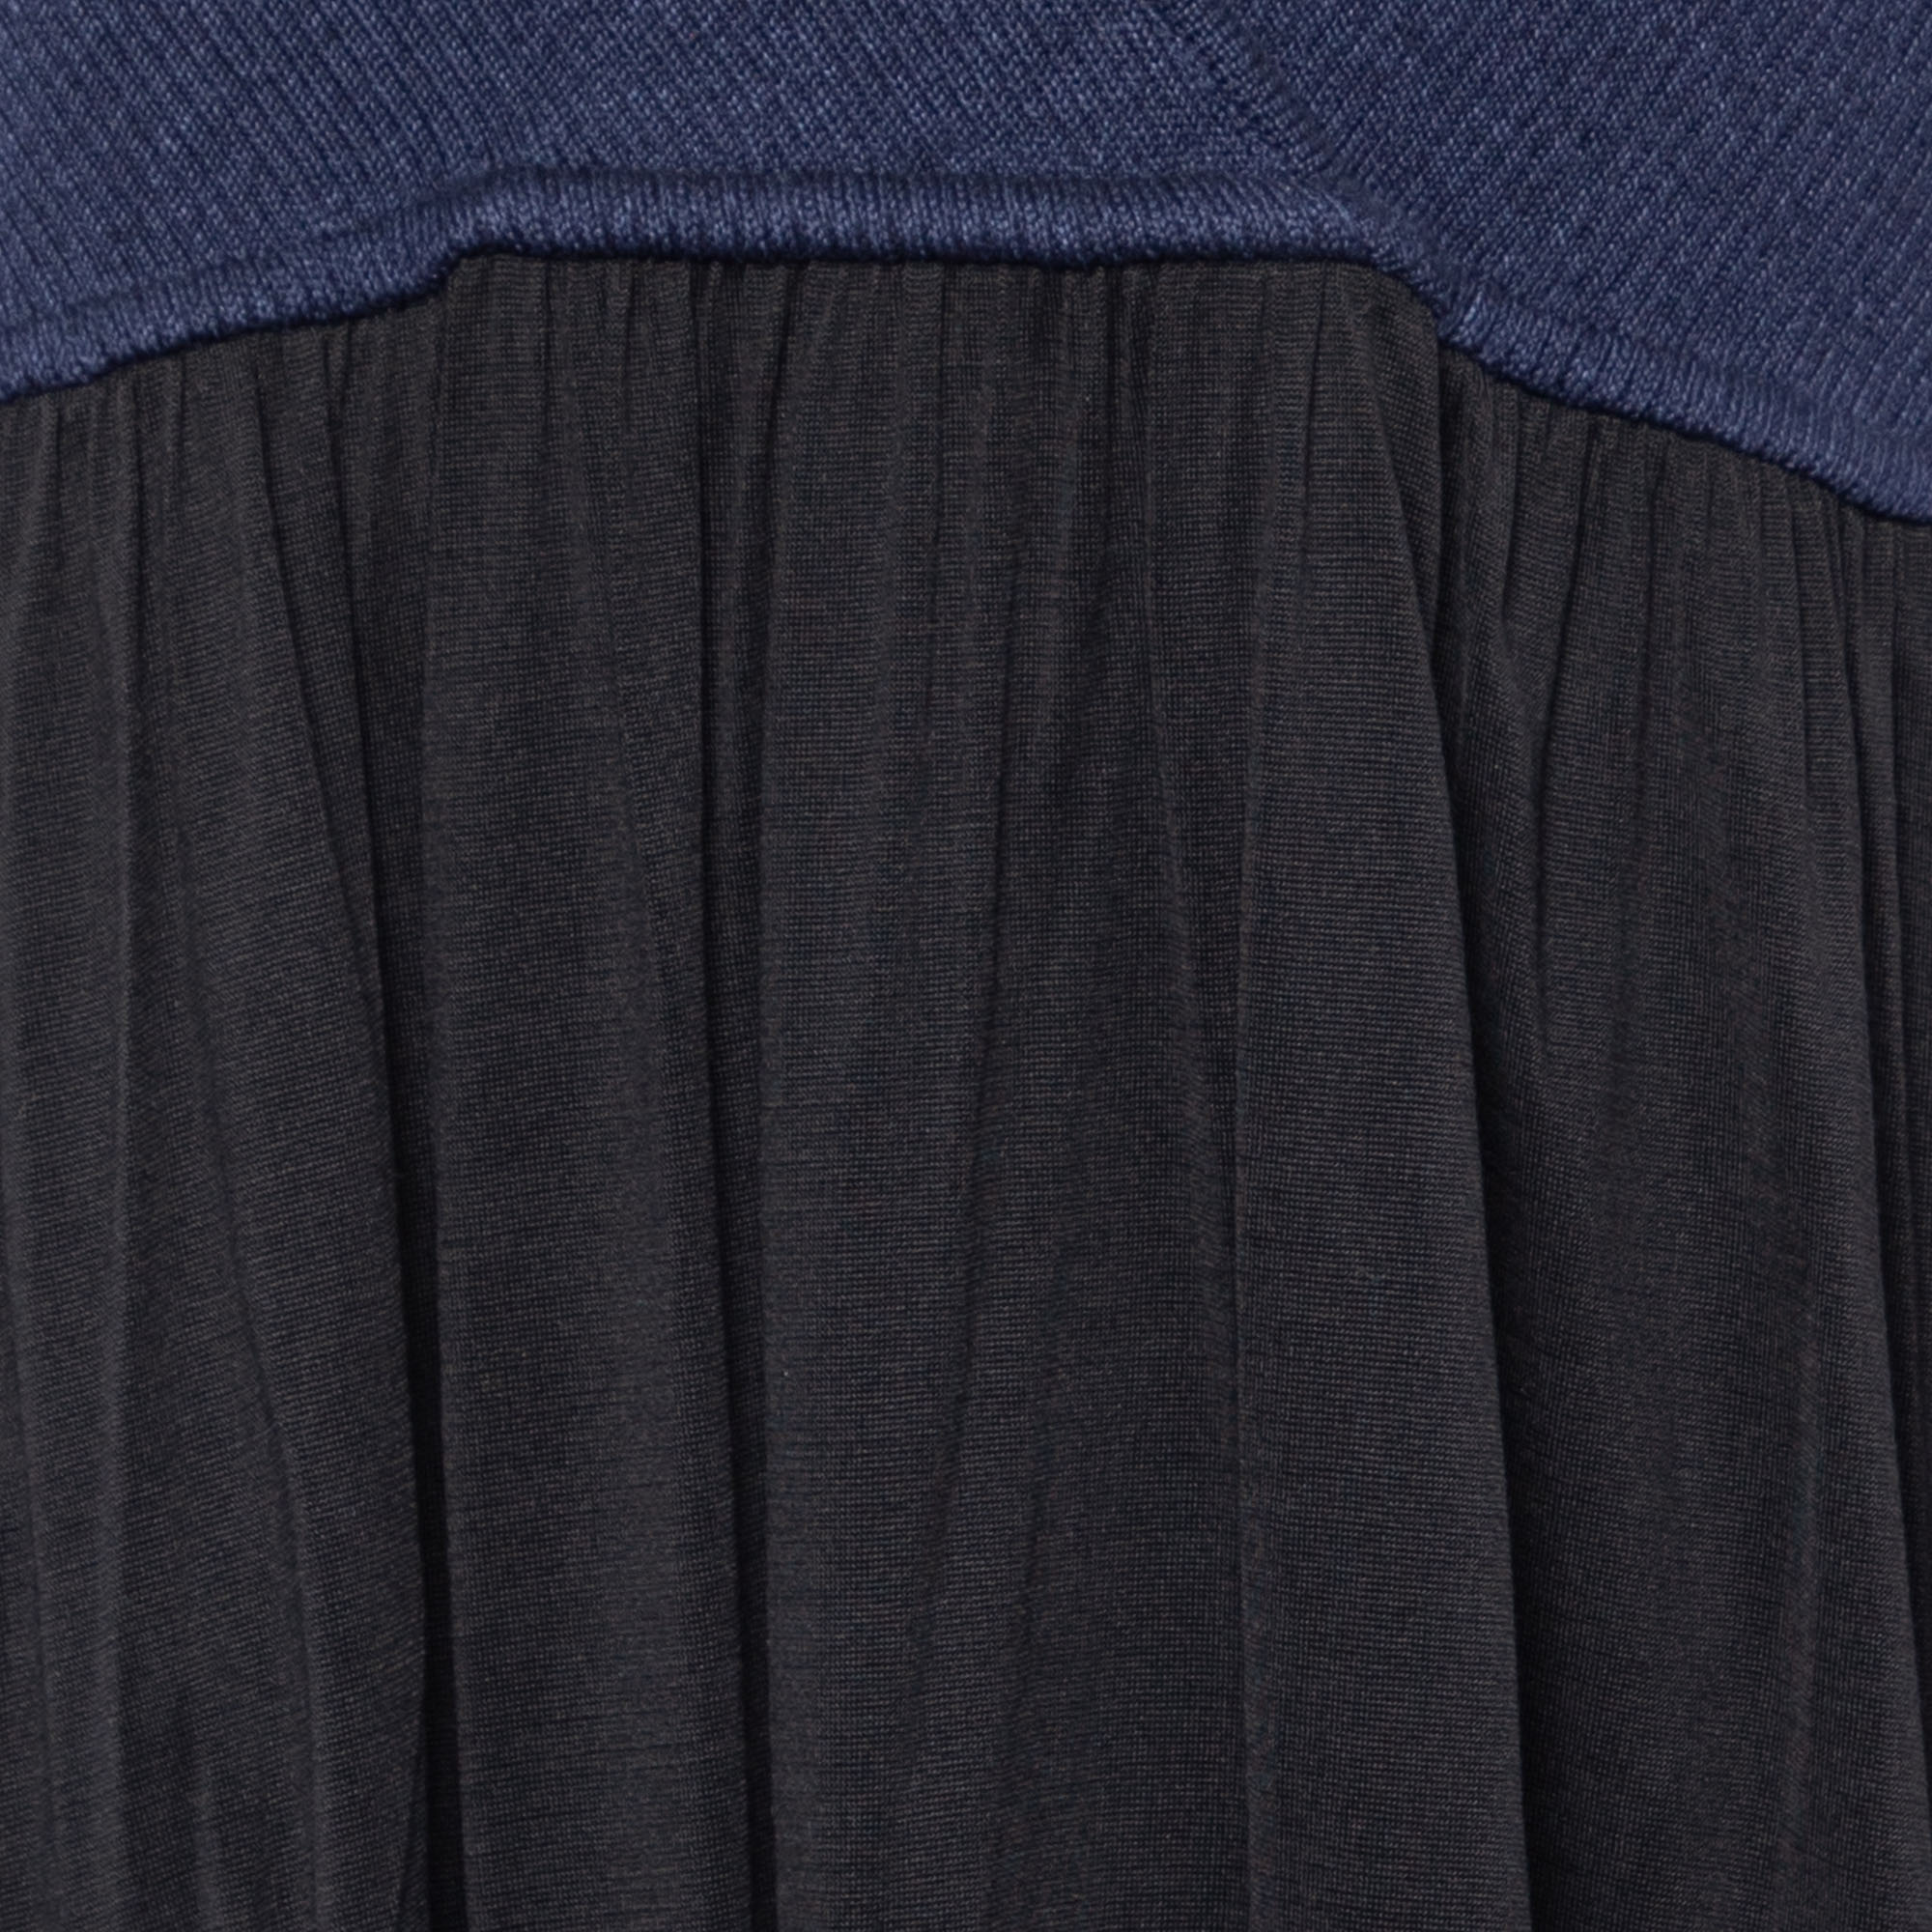 Chloe Navy Blue Knit & Black Skirt Detail Maxi Dress M